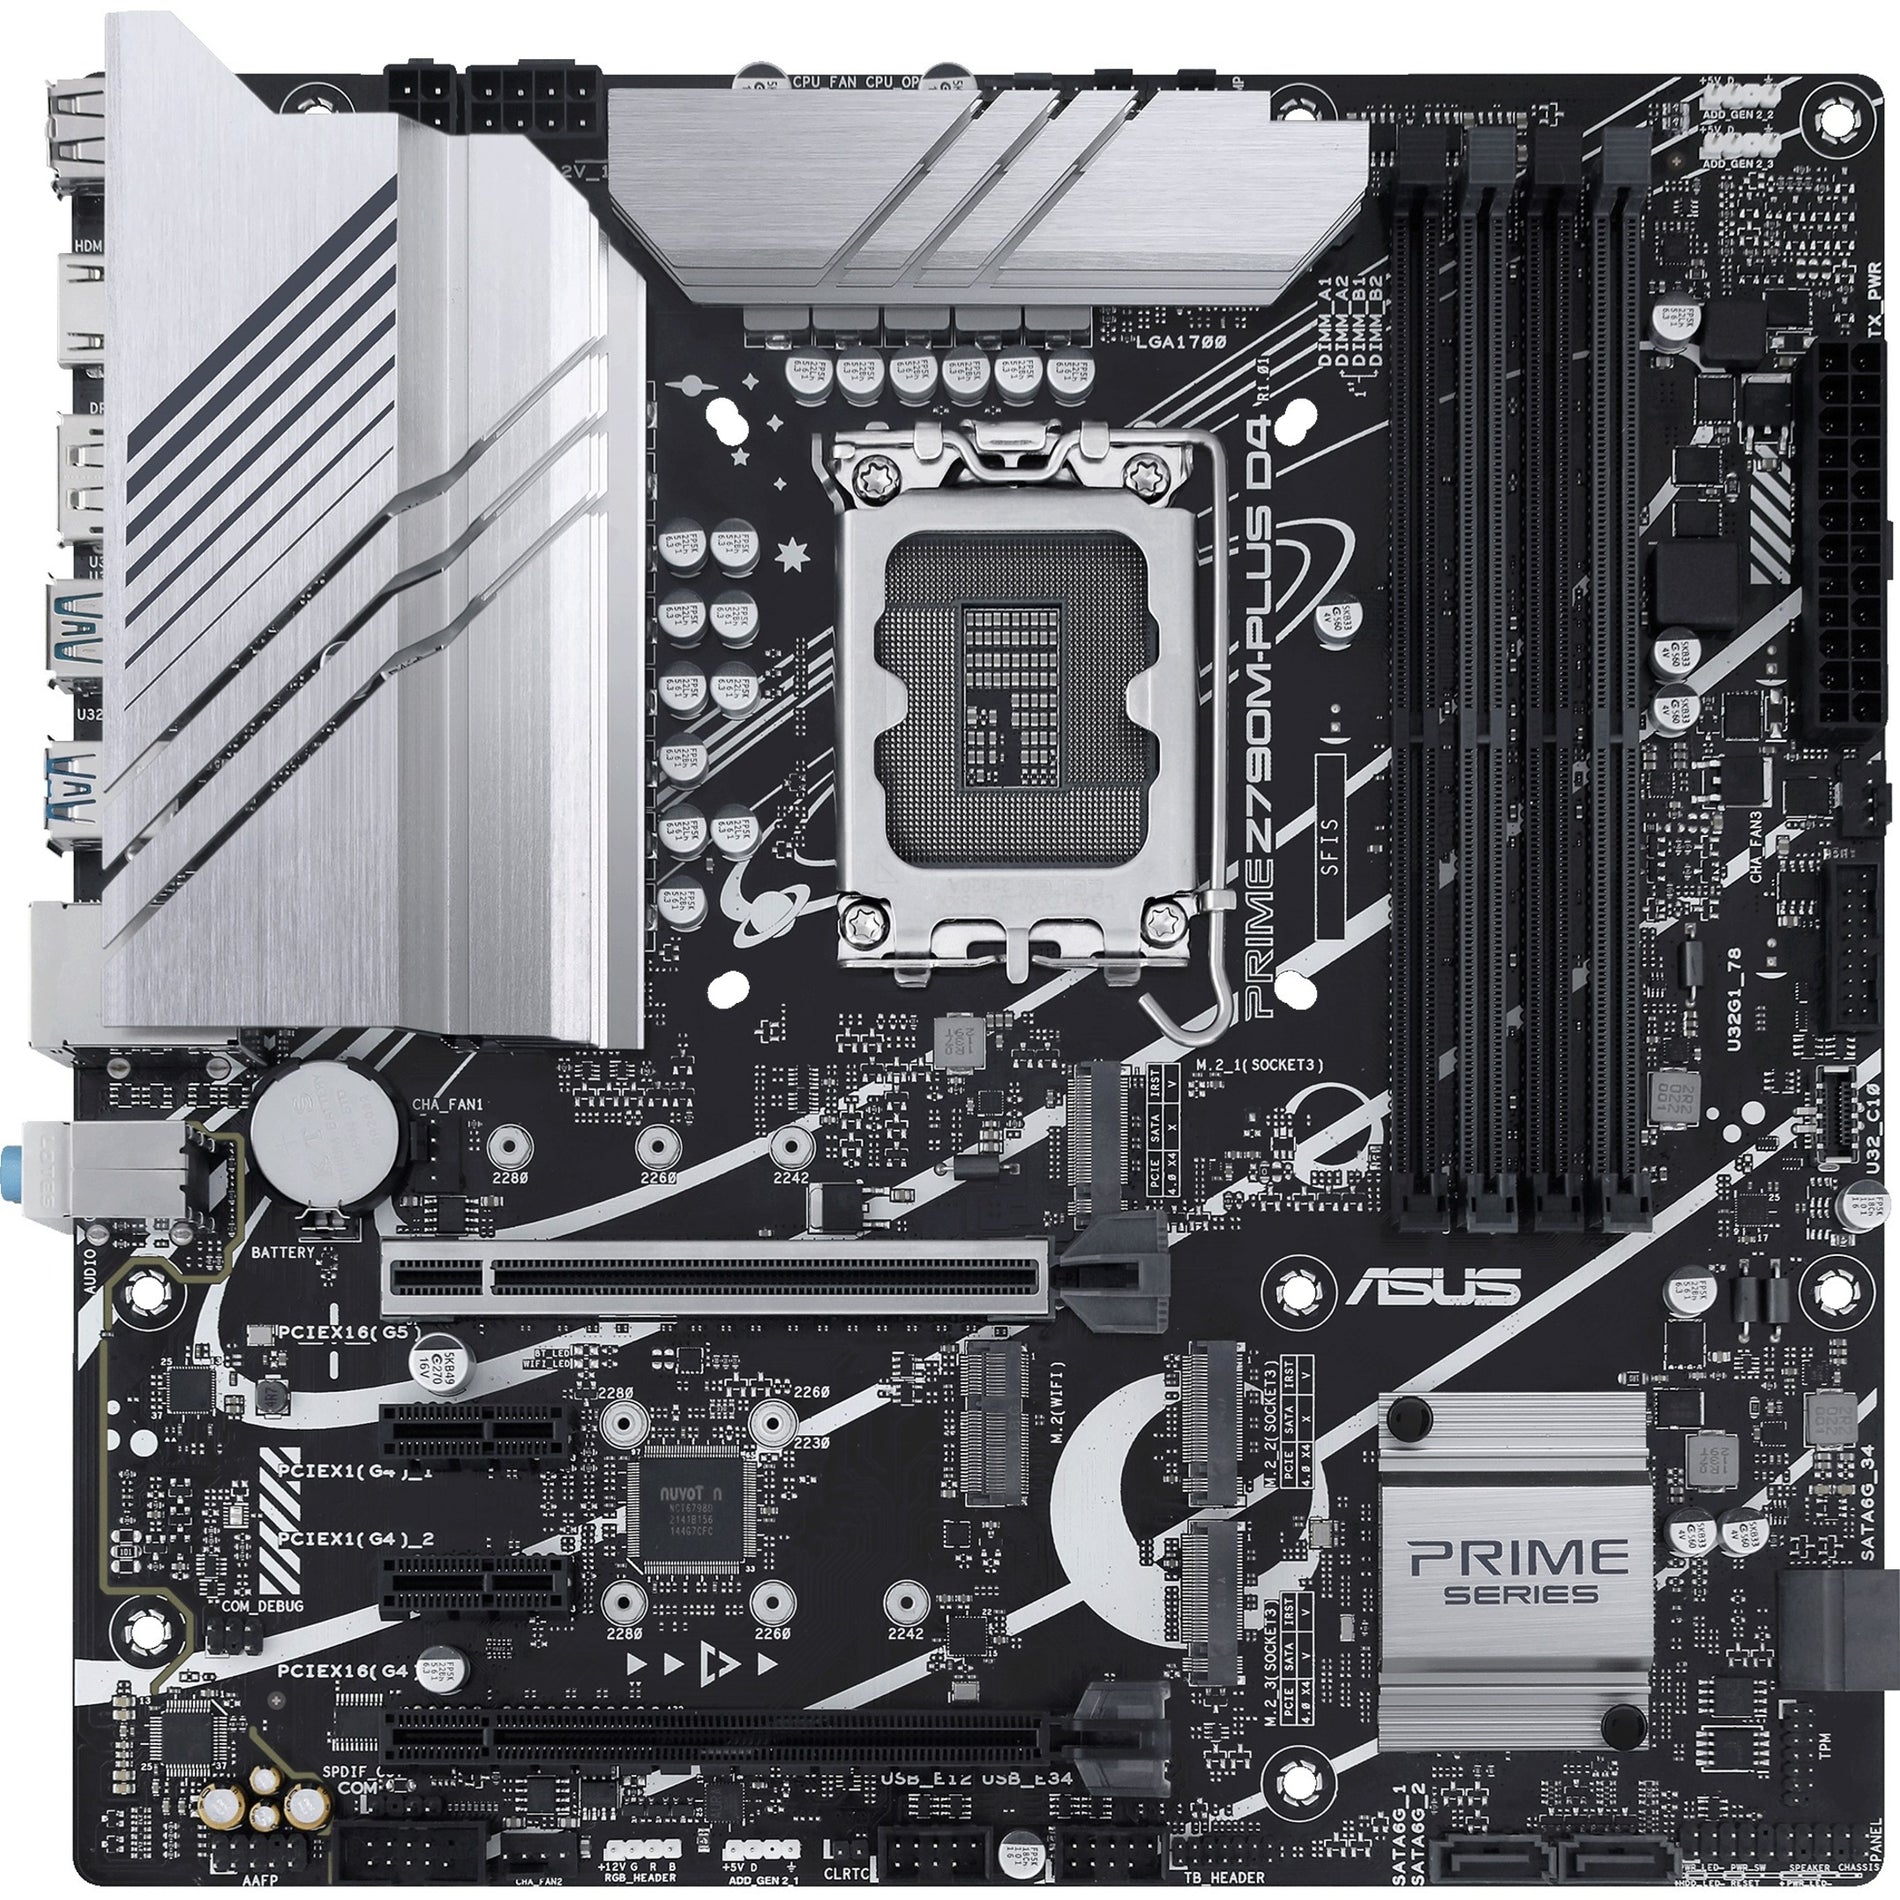 ASUS PRIMEZ790M-PLUSD4 Gaming Desktop Motherboard PCIe 5.0, 3xM.2 slots, 10+1 DrMOS, DDR4, 1 Gb LAN, DP, USB 3.2 Gen 2x2 Type-C, Thunderbolt (USB4) support